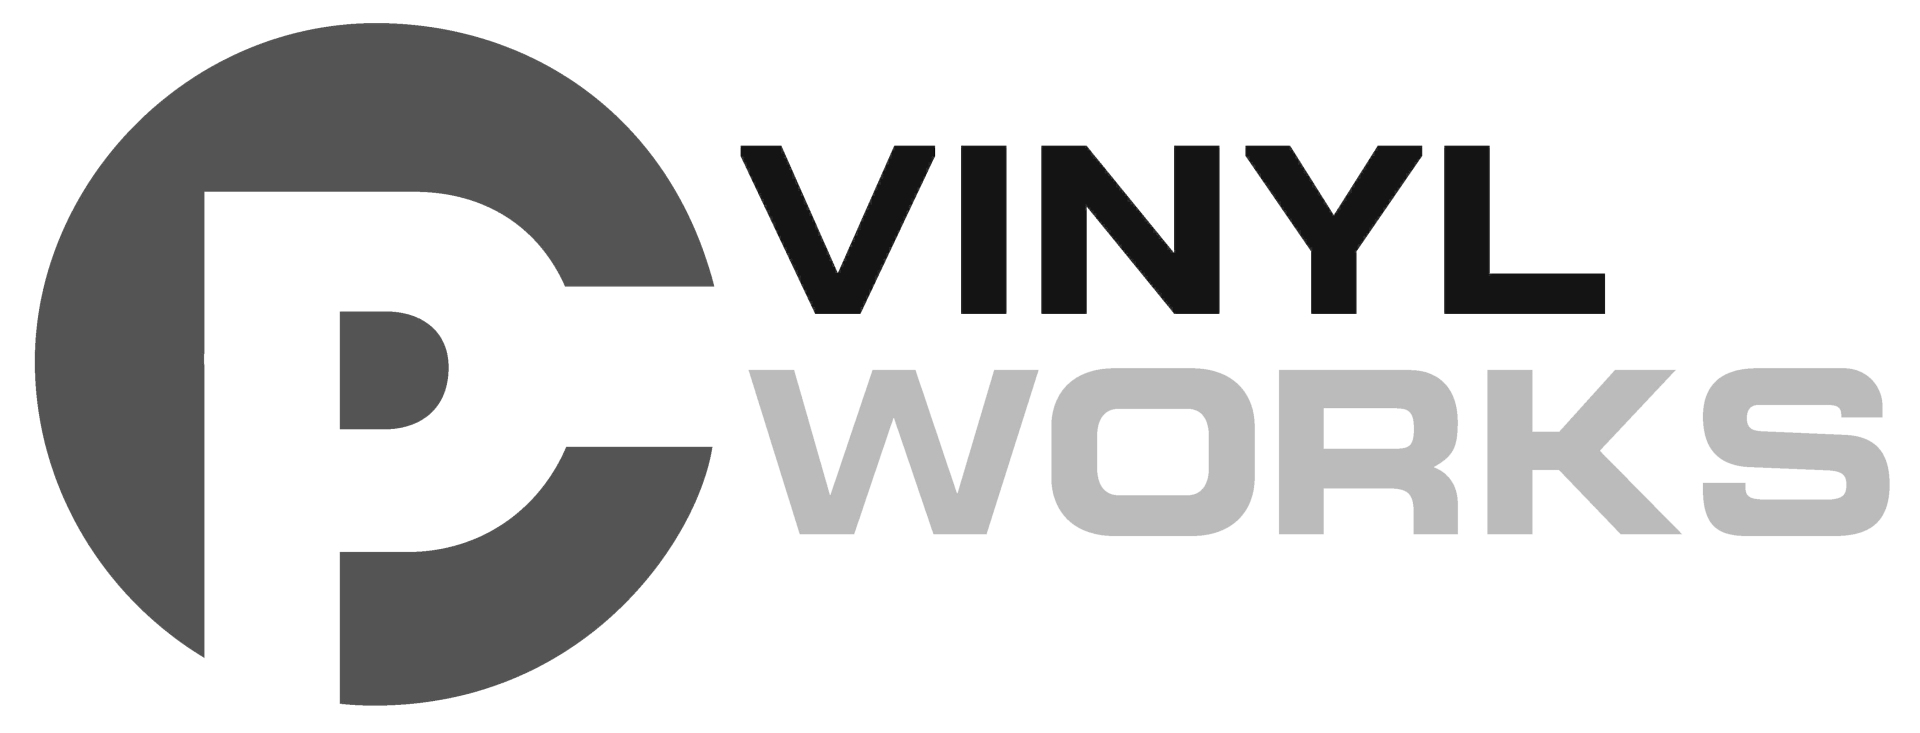 Vinyl Works